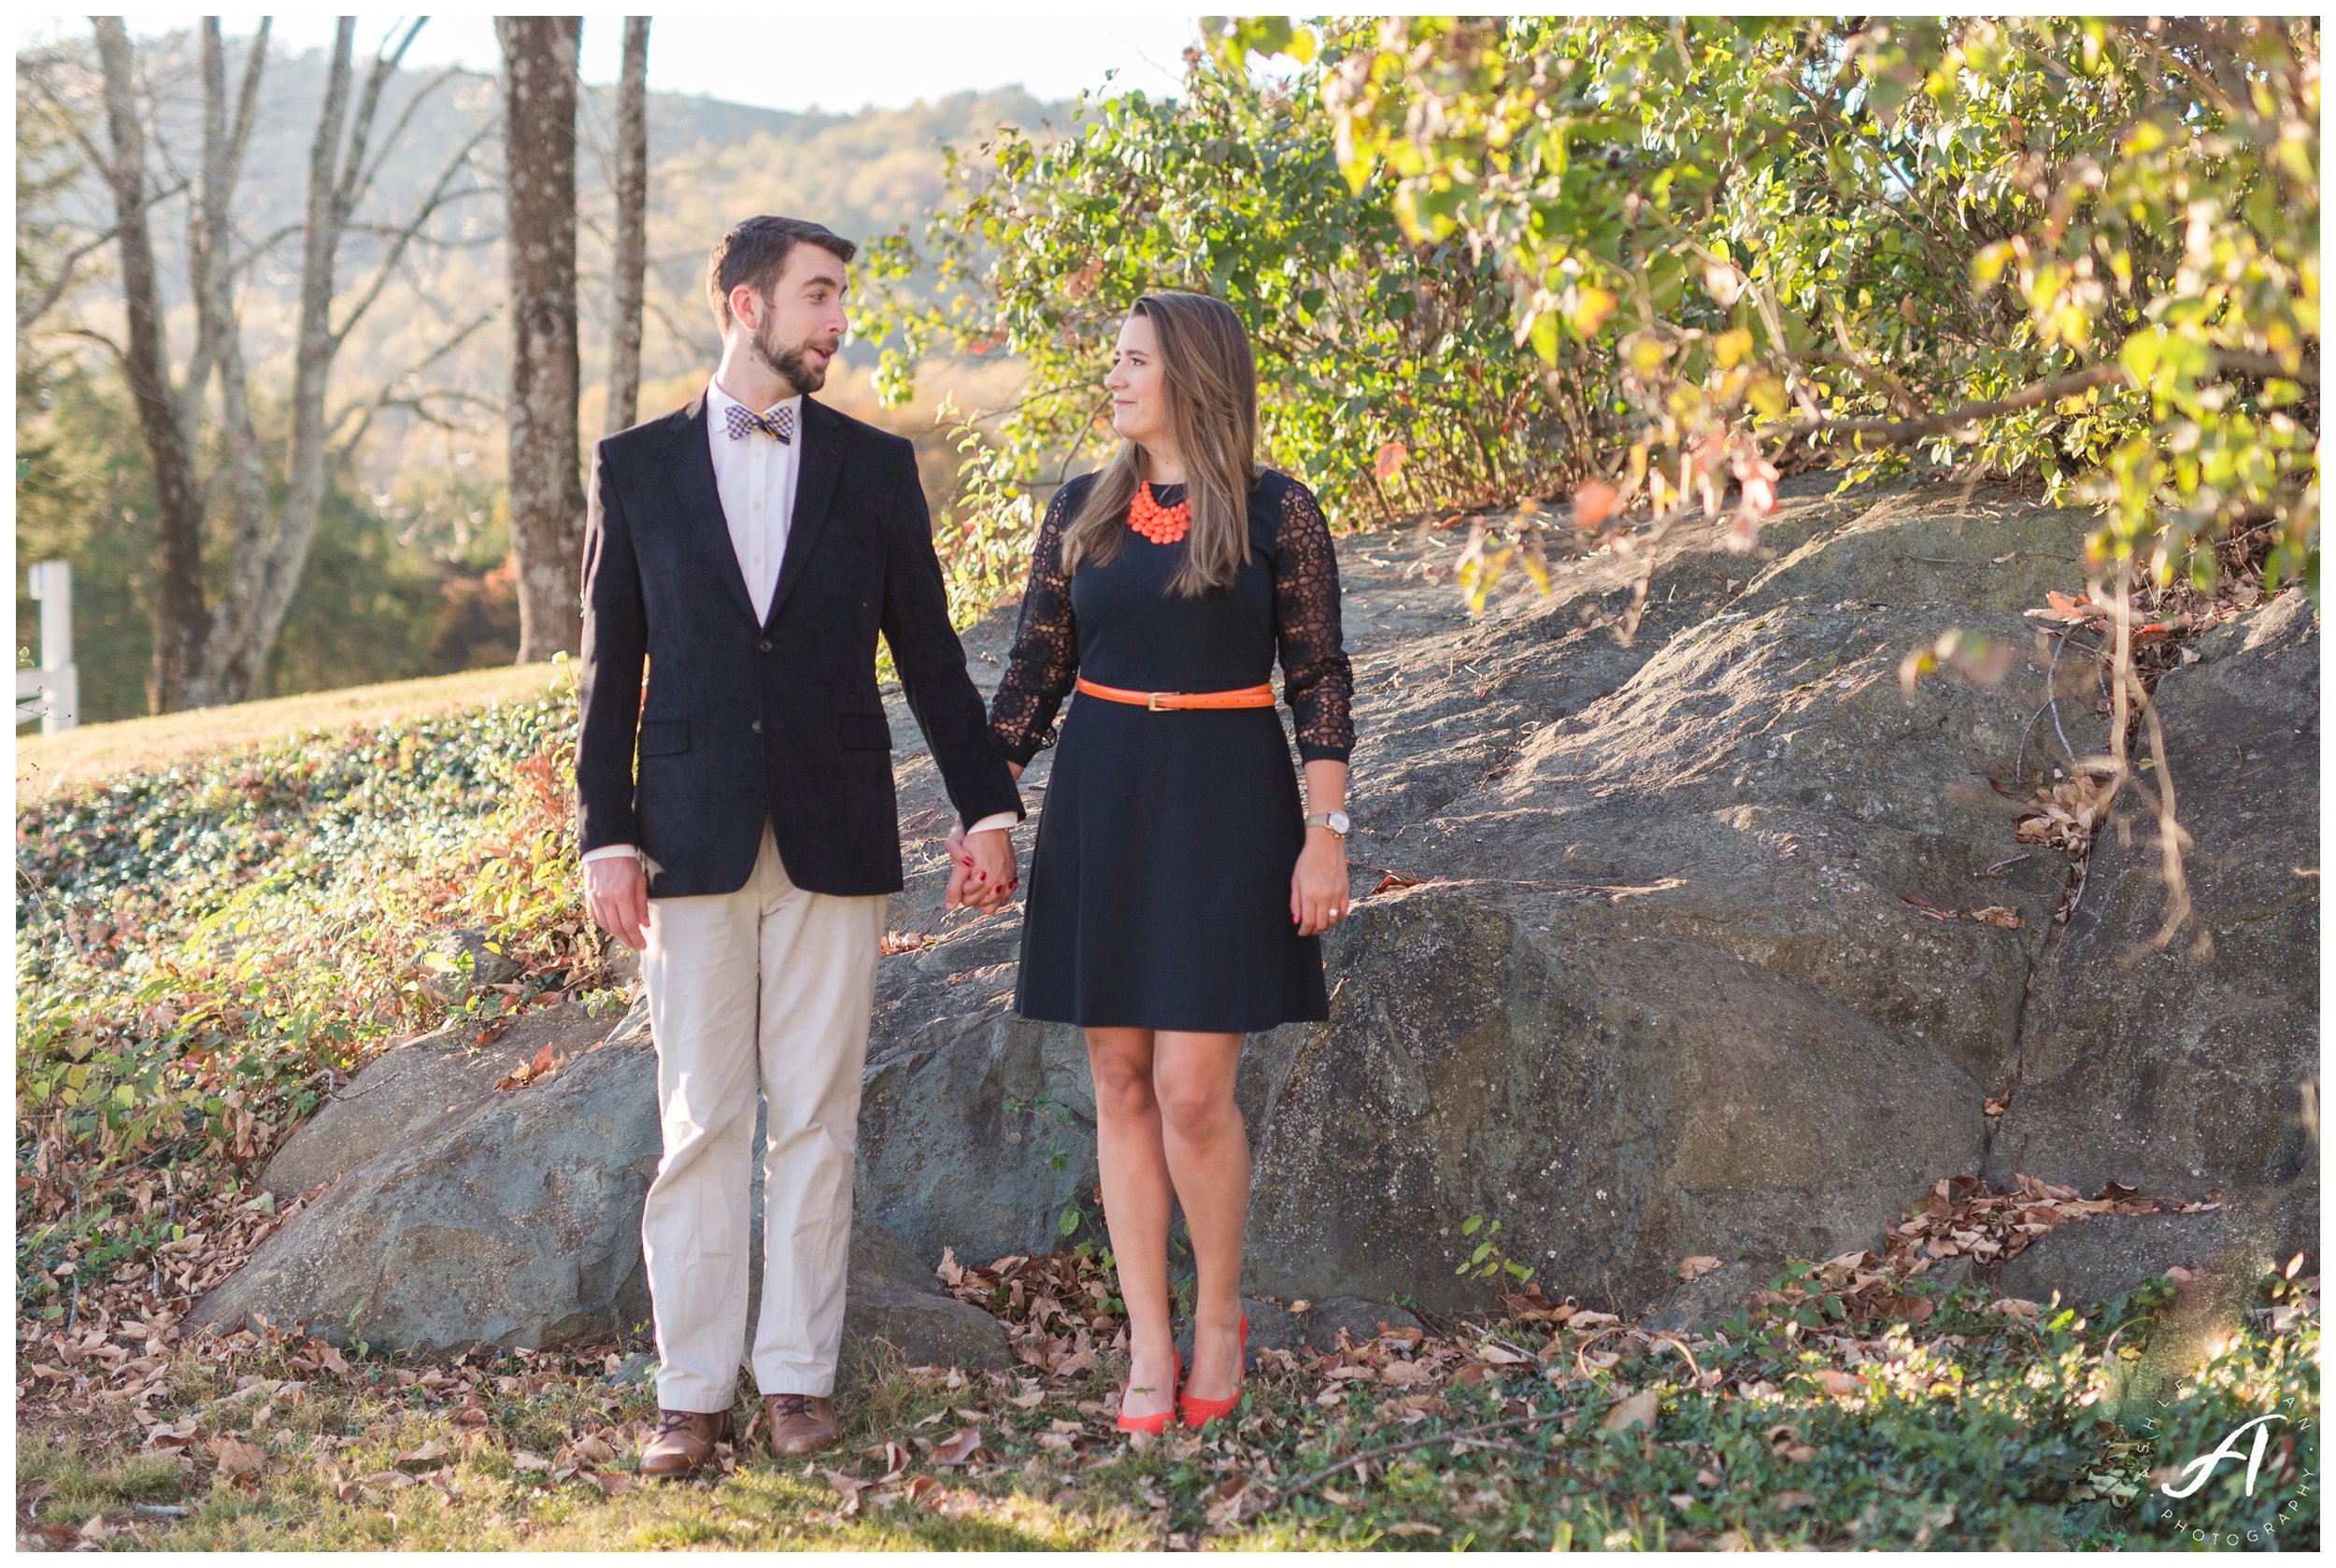 Ashlawn-Highland Engagement Session || Charlottesville Wedding and Engagement photographer || Central Virginia Fall Photos ||  www.ashleyeiban.com